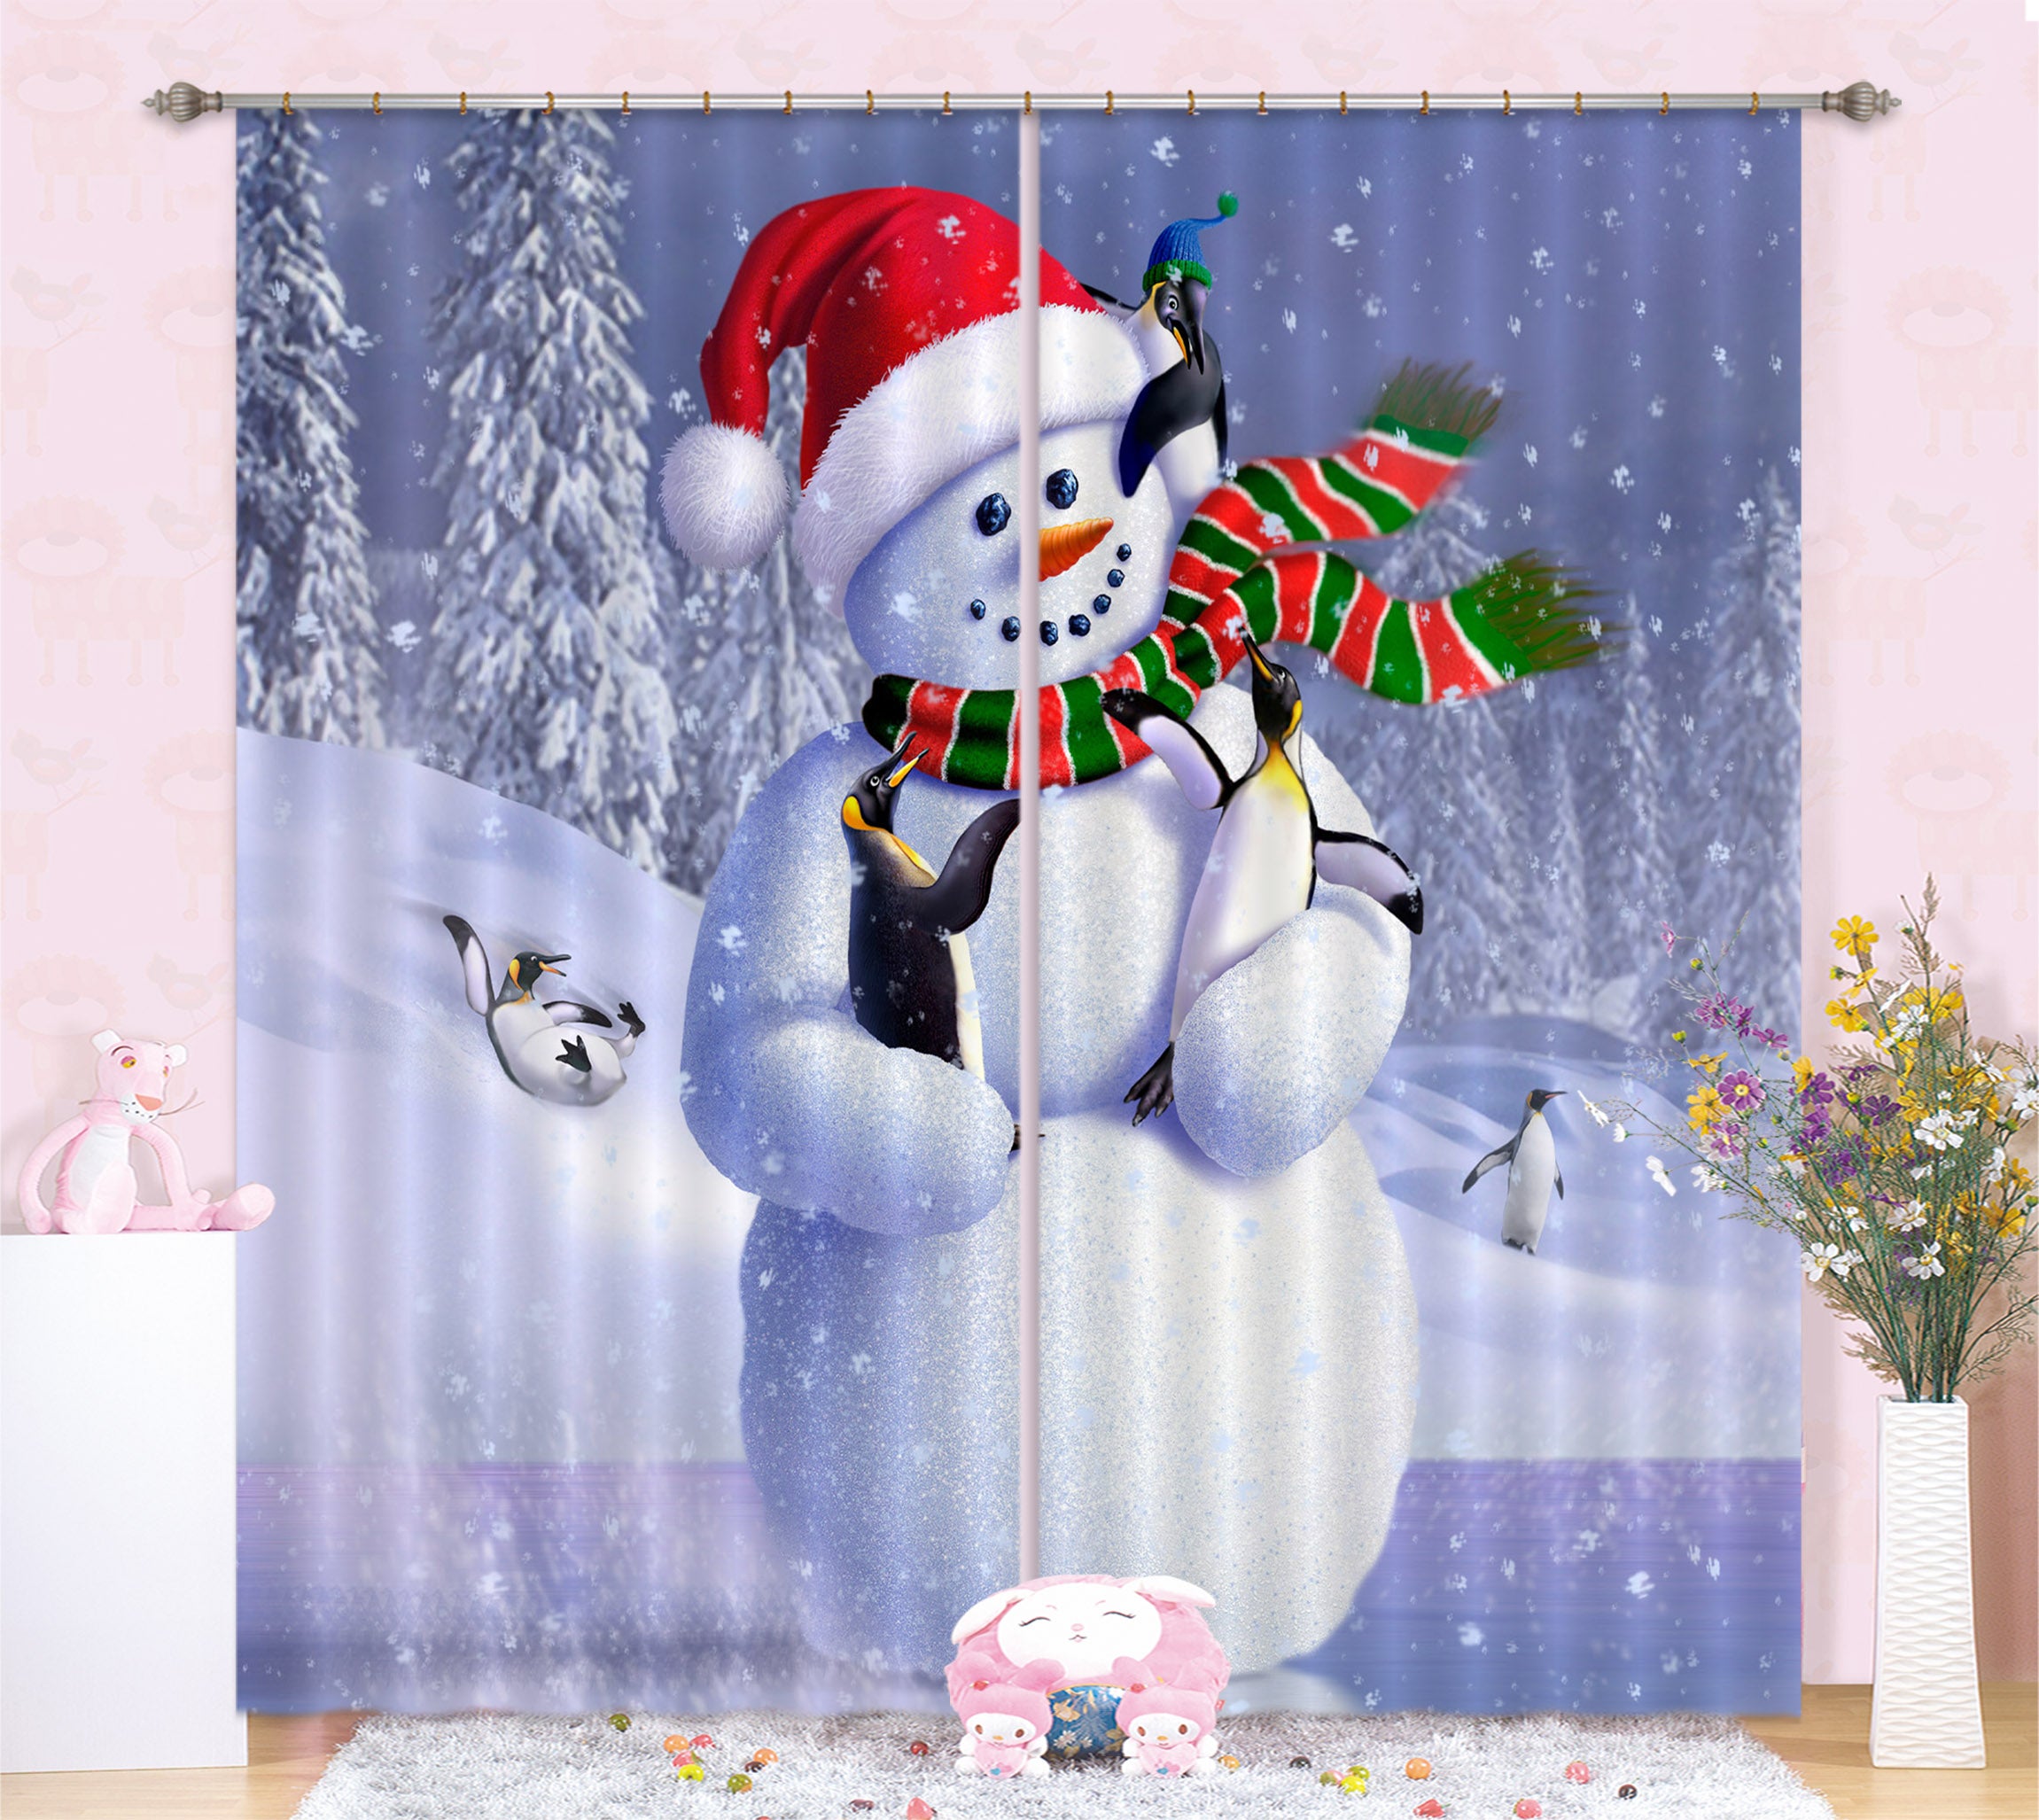 3D Snowman 86097 Jerry LoFaro Curtain Curtains Drapes